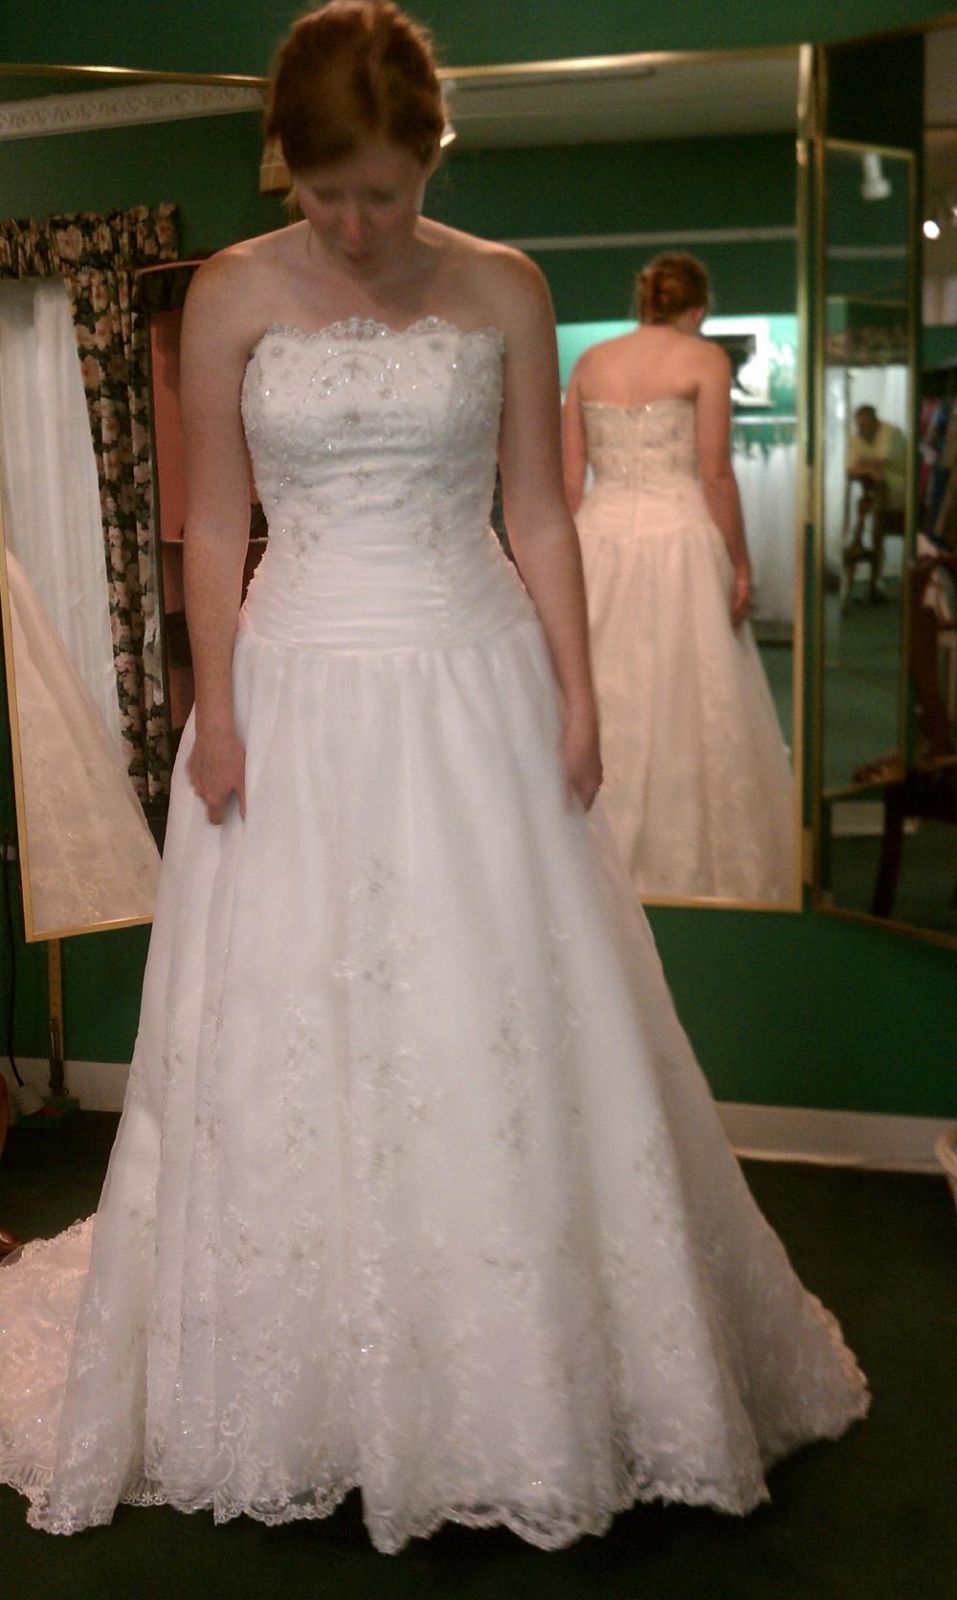 New - Never Worn Gorgeous Casablanca Wedding Dress